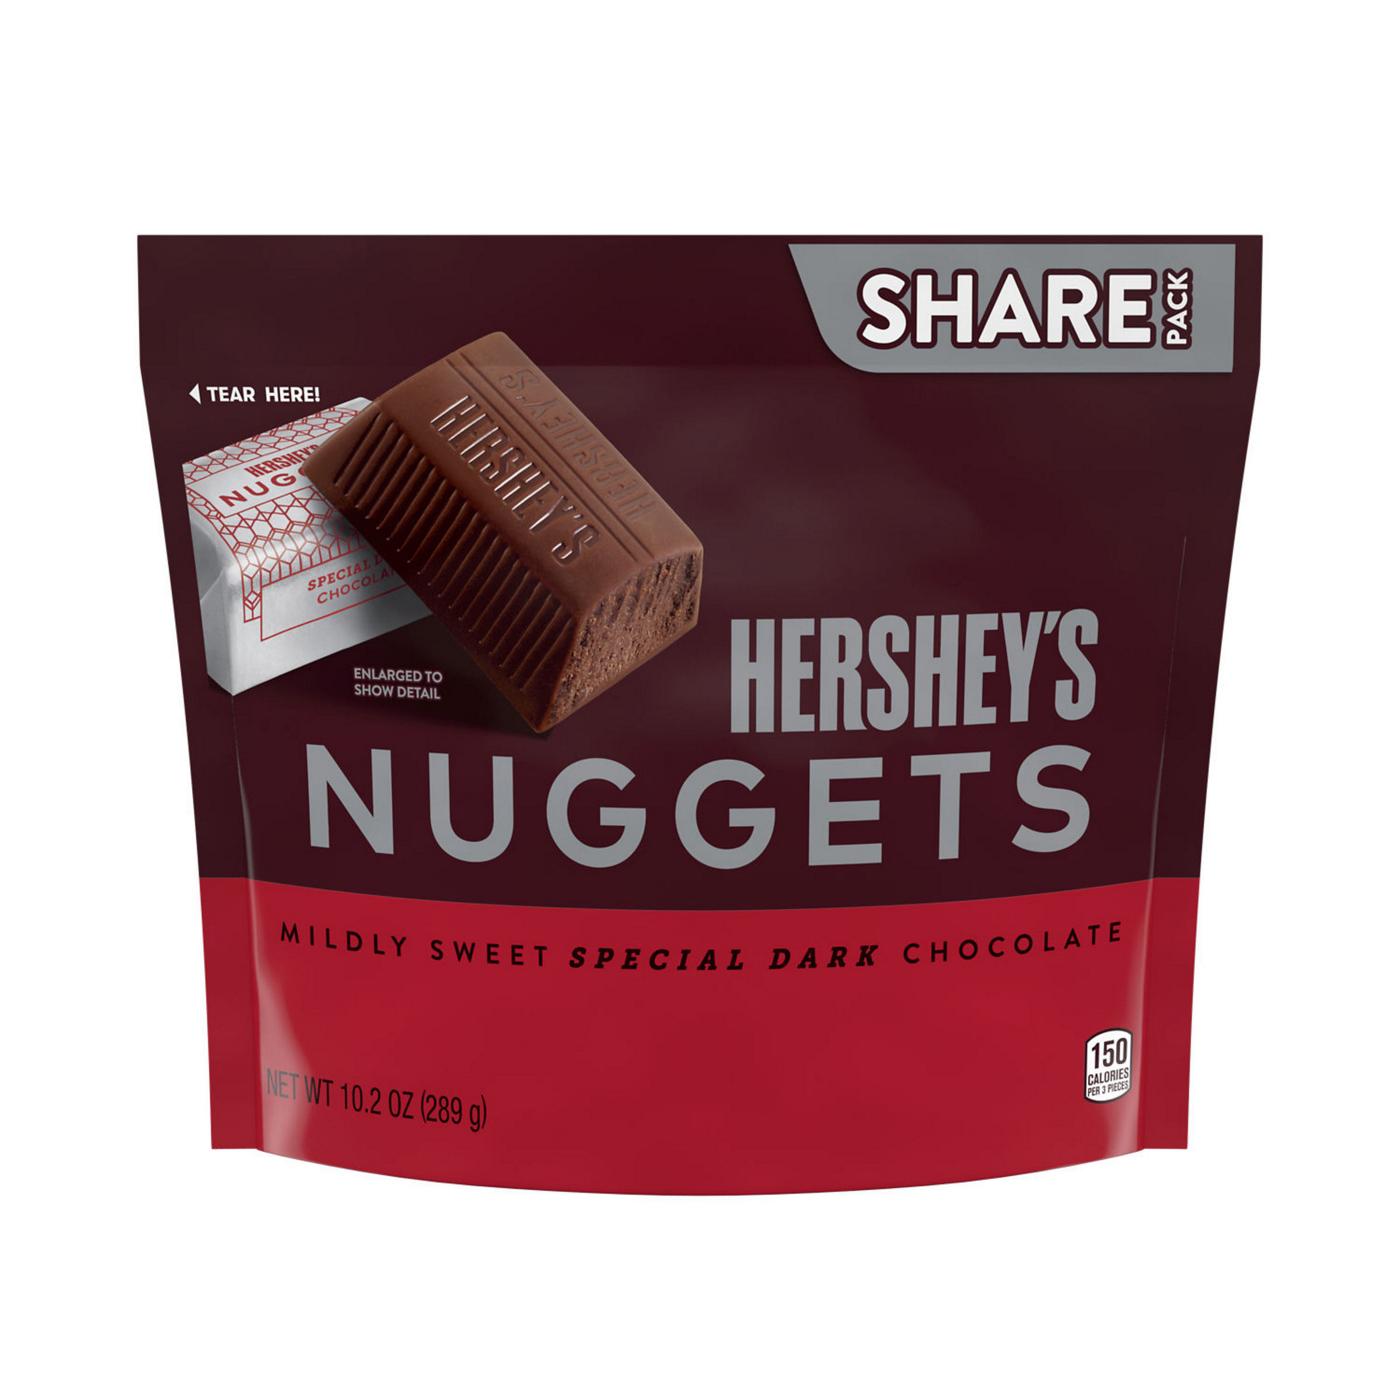 REESE'S Miniatures Dark Chocolate Peanut Butter Cups, 10.2 oz bag